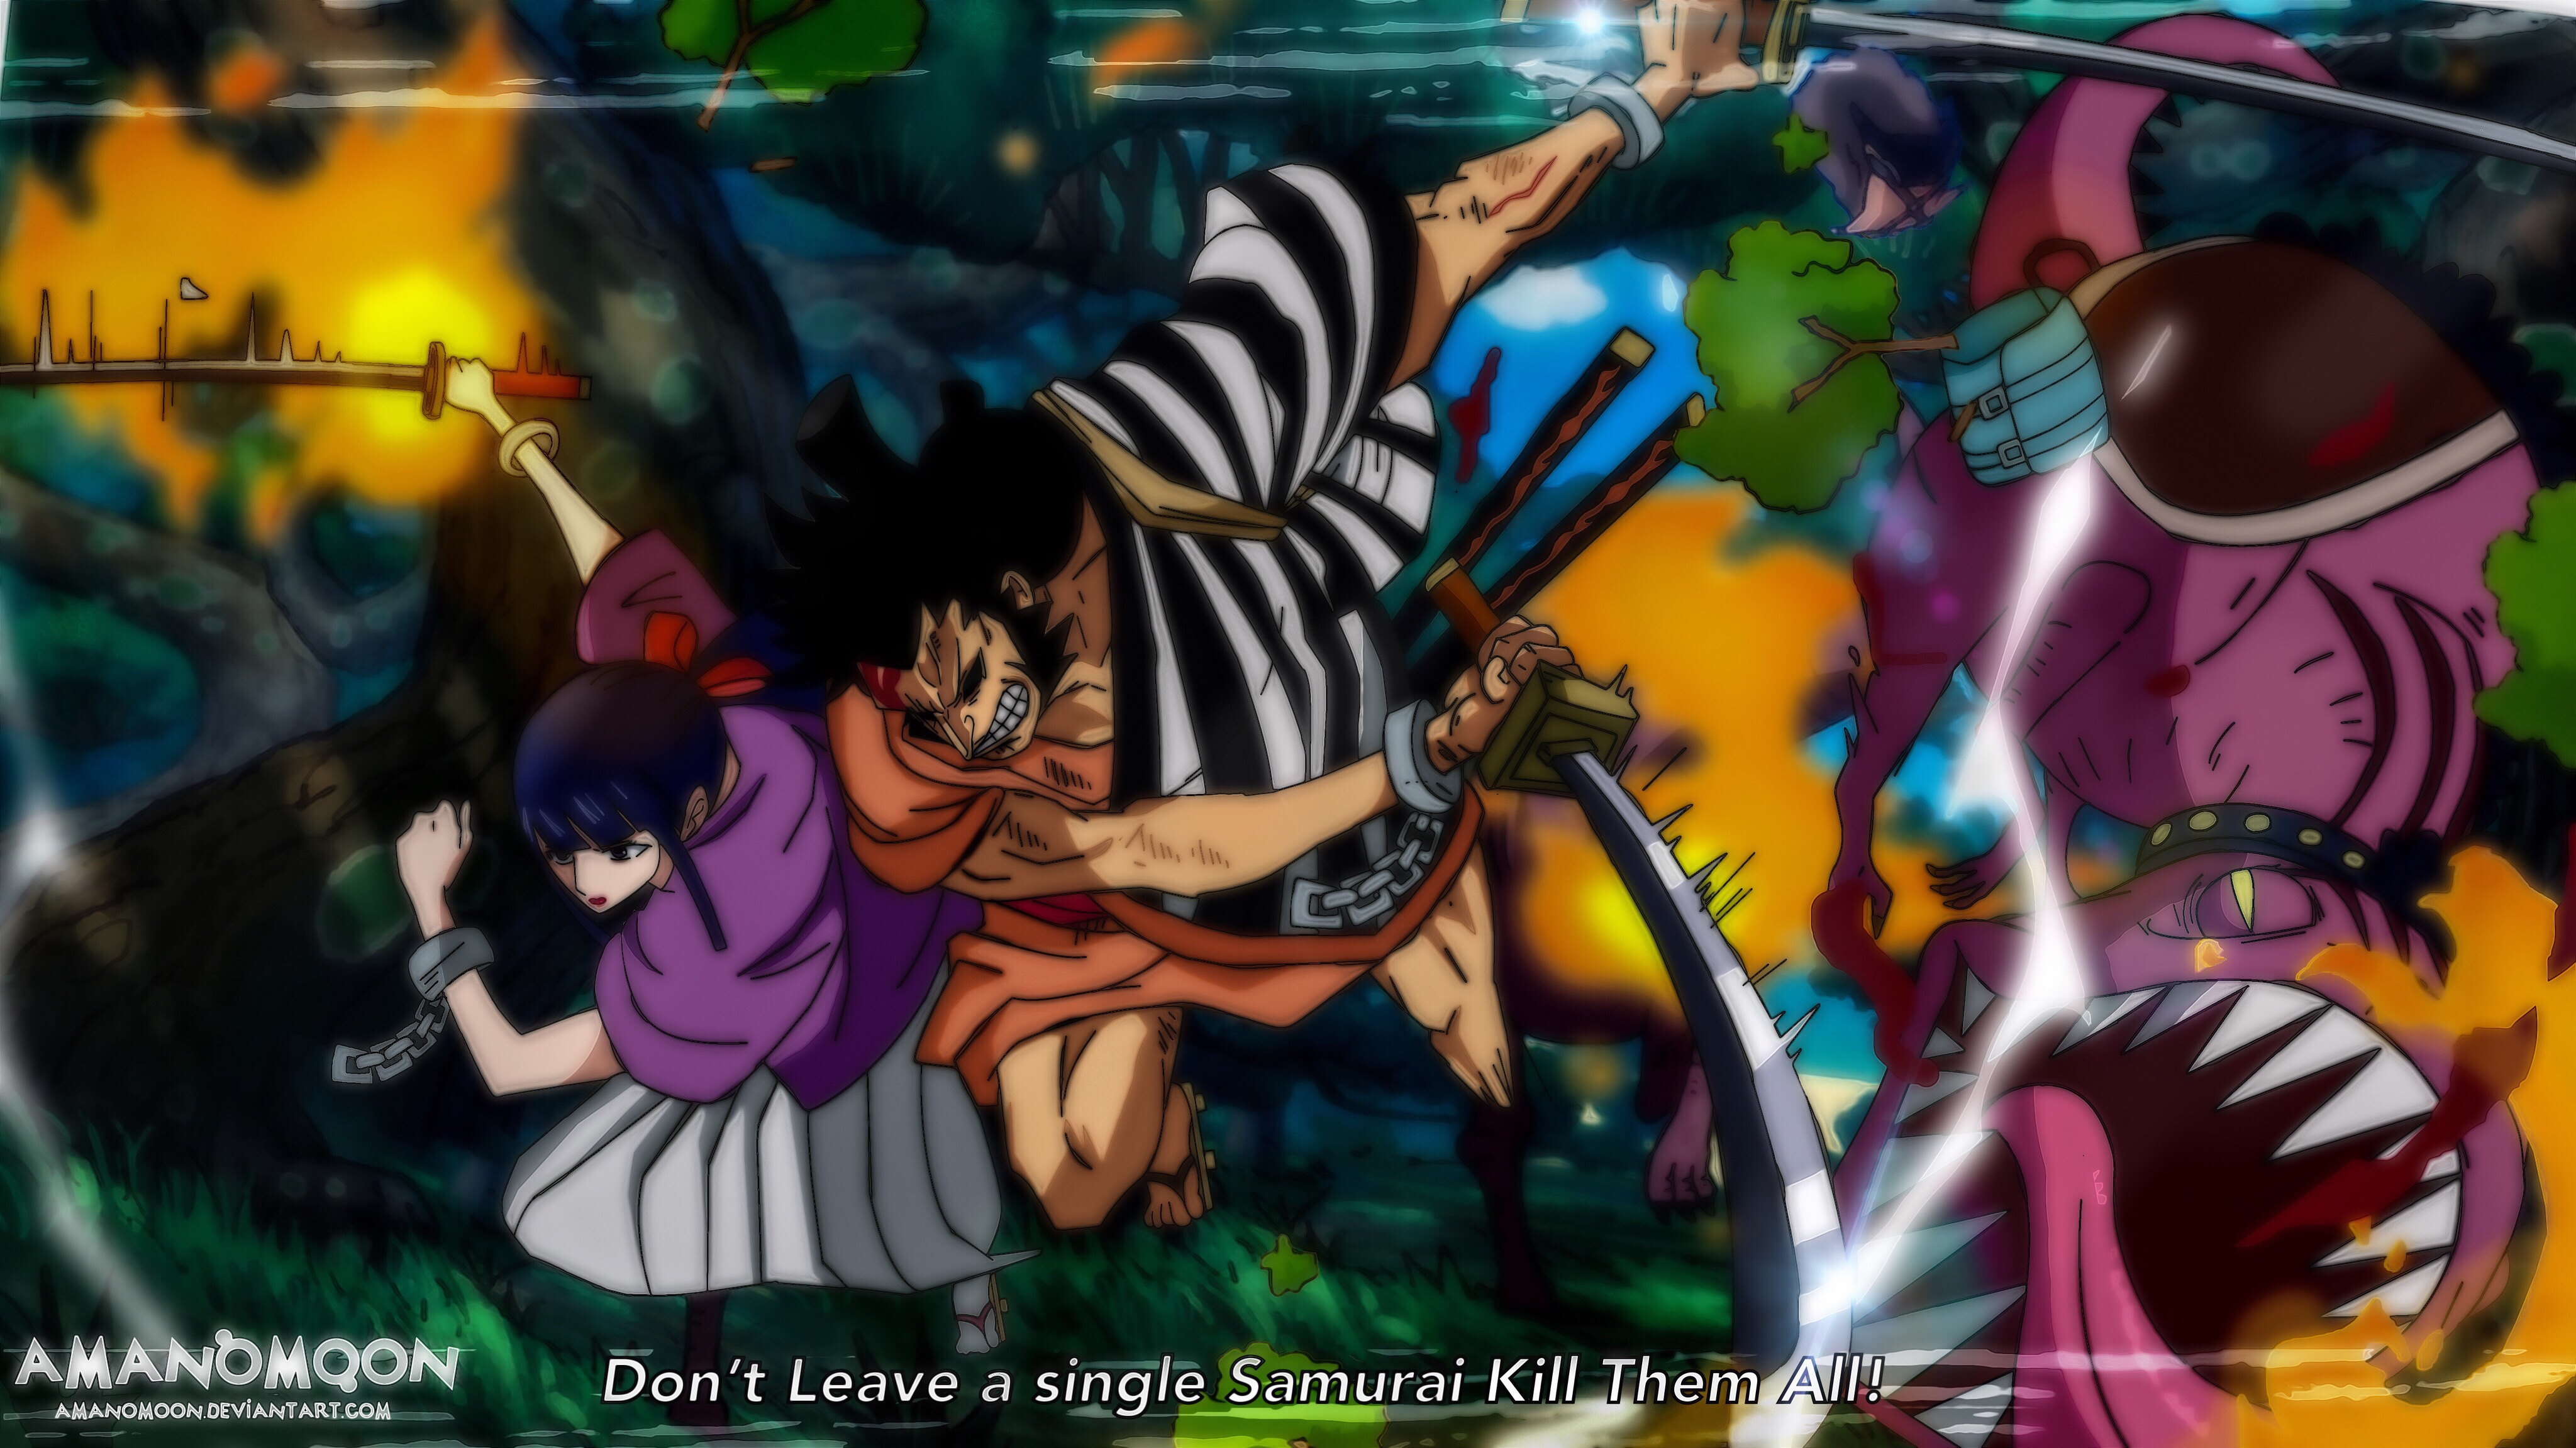 One Piece Chapter 973 Kinemon O Kiku Anime Style By Amanomoon On Deviantart